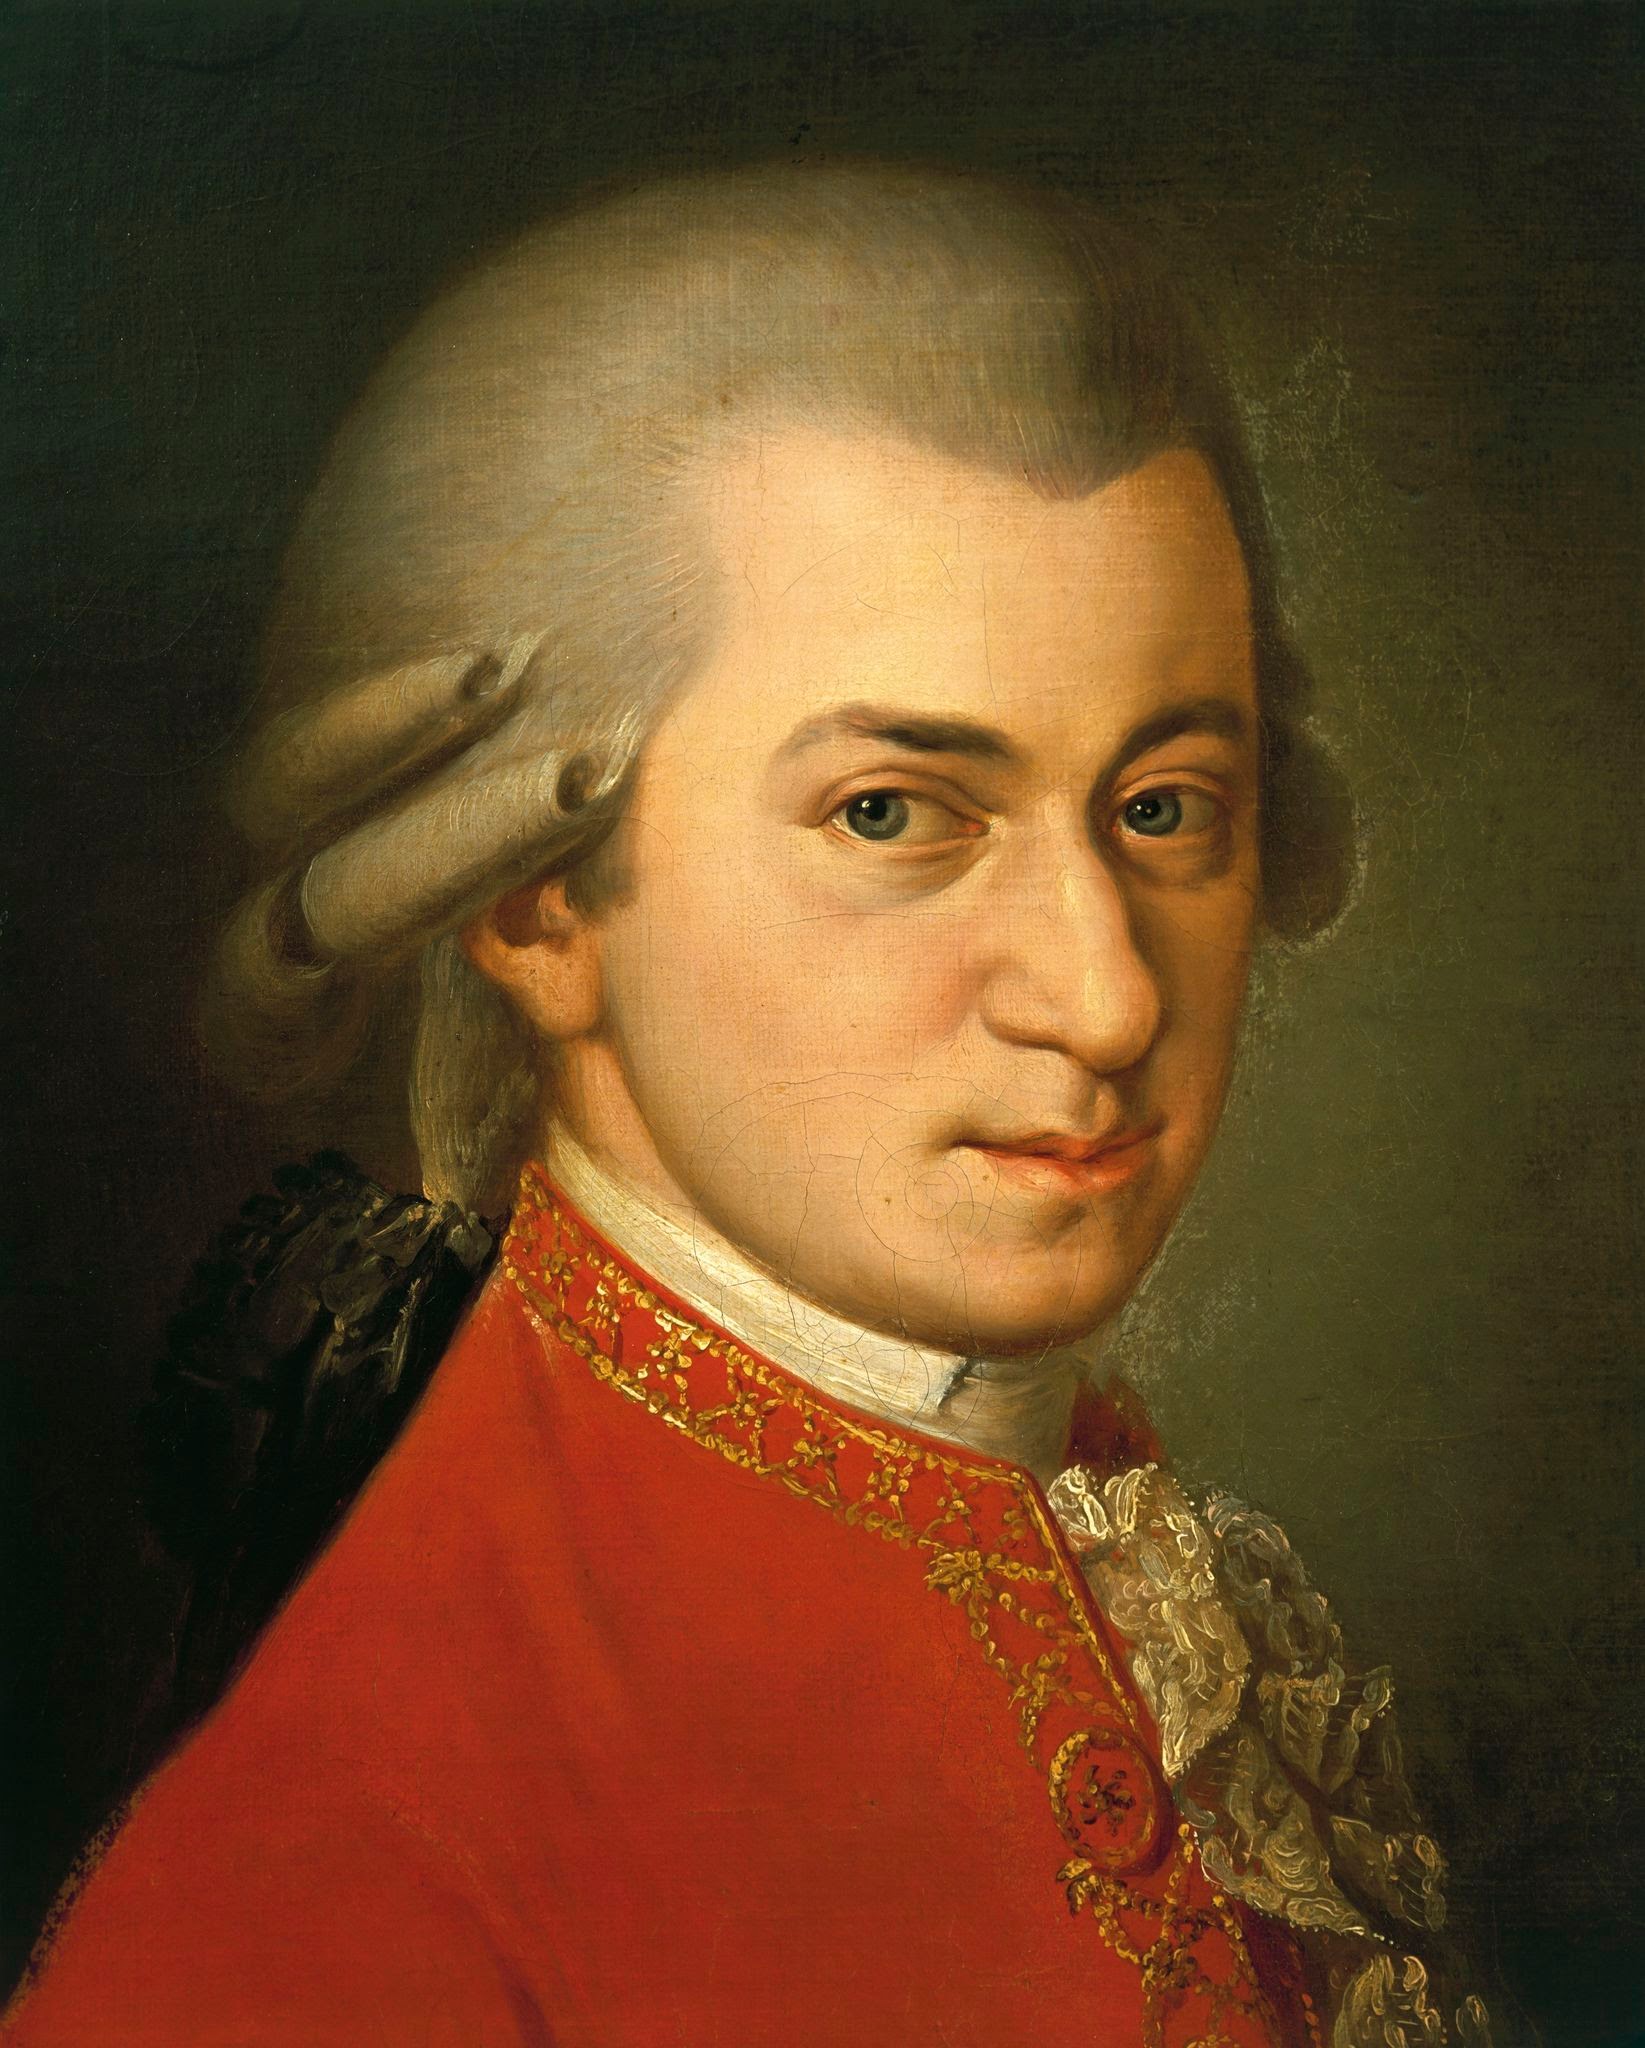 UNSPECIFIED - CIRCA 1986:  Austria - 18th century. Portrait of Wolfgang Amadeus Mozart (Salzburg, 1756 - Vienna, 1791), Austrian composer and pianist. Detail.  (Photo By DEA / A. DAGLI ORTI/De Agostini/Getty Images)